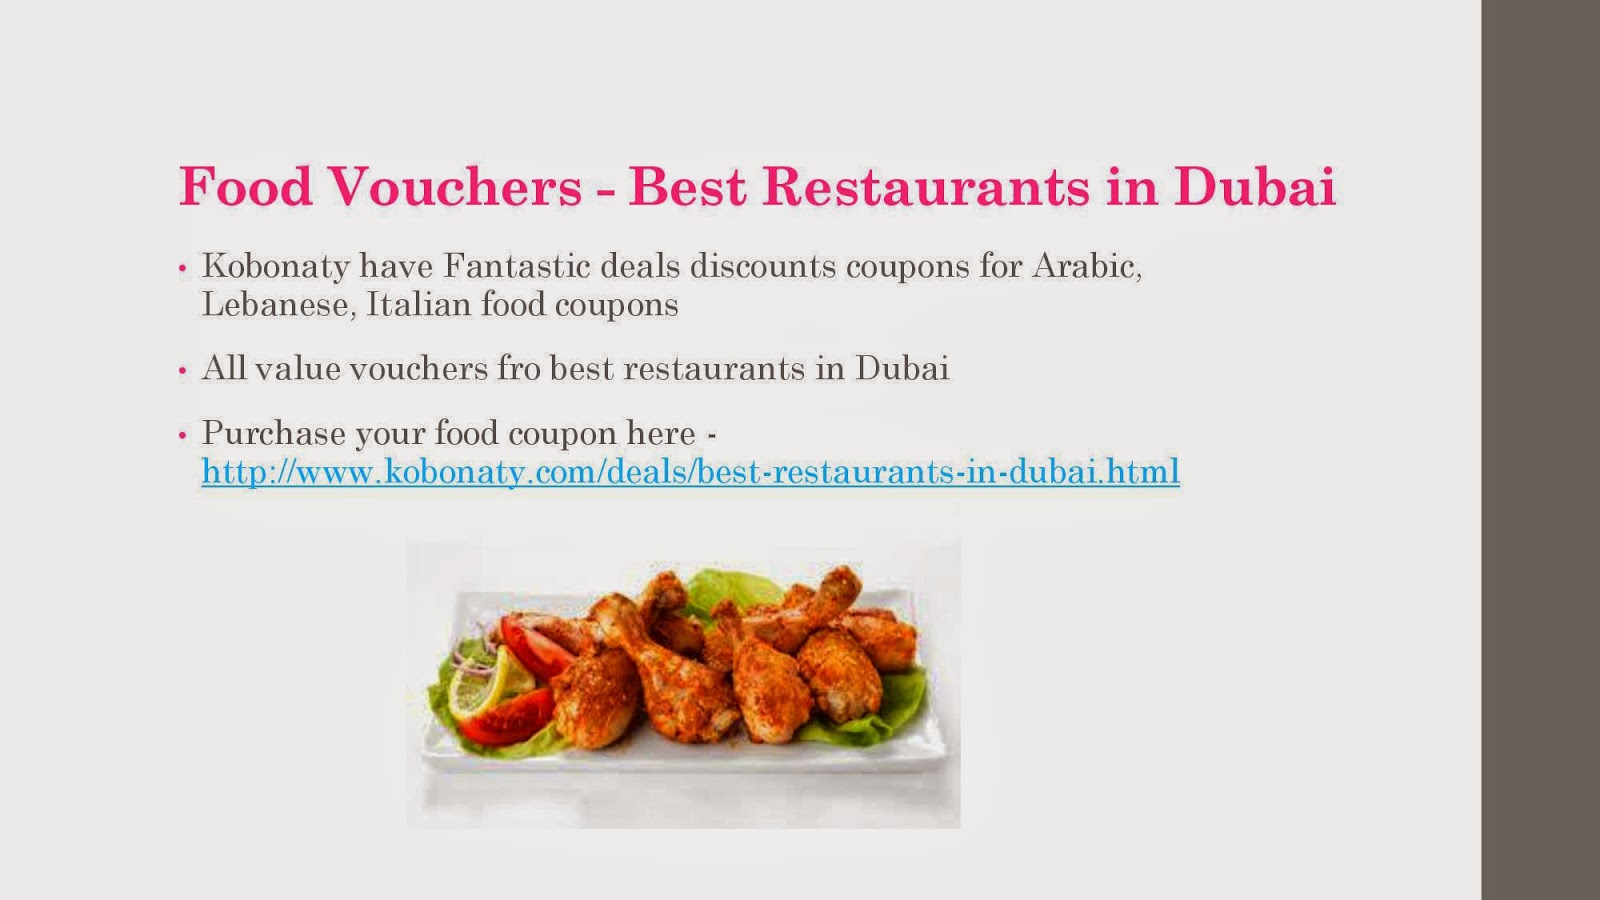 http://www.kobonaty.com/deals/best-restaurants-in-dubai.html